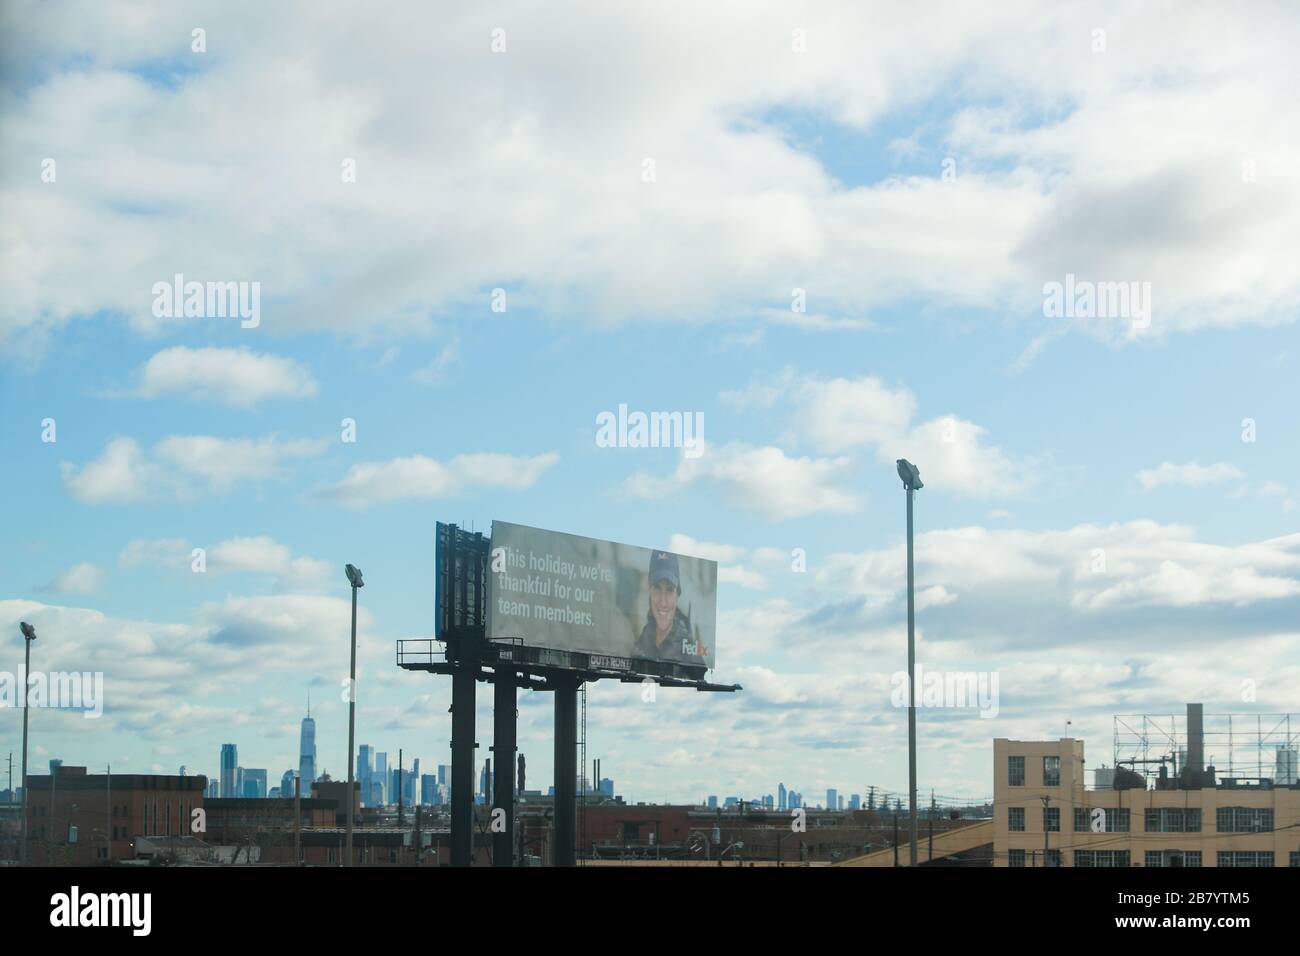 Secaucus, NJ / USA November 28, 2019: An advertisement billboard of FedEx on highway I-95 near New York City. FedEx Corporation is an American multina Stock Photo